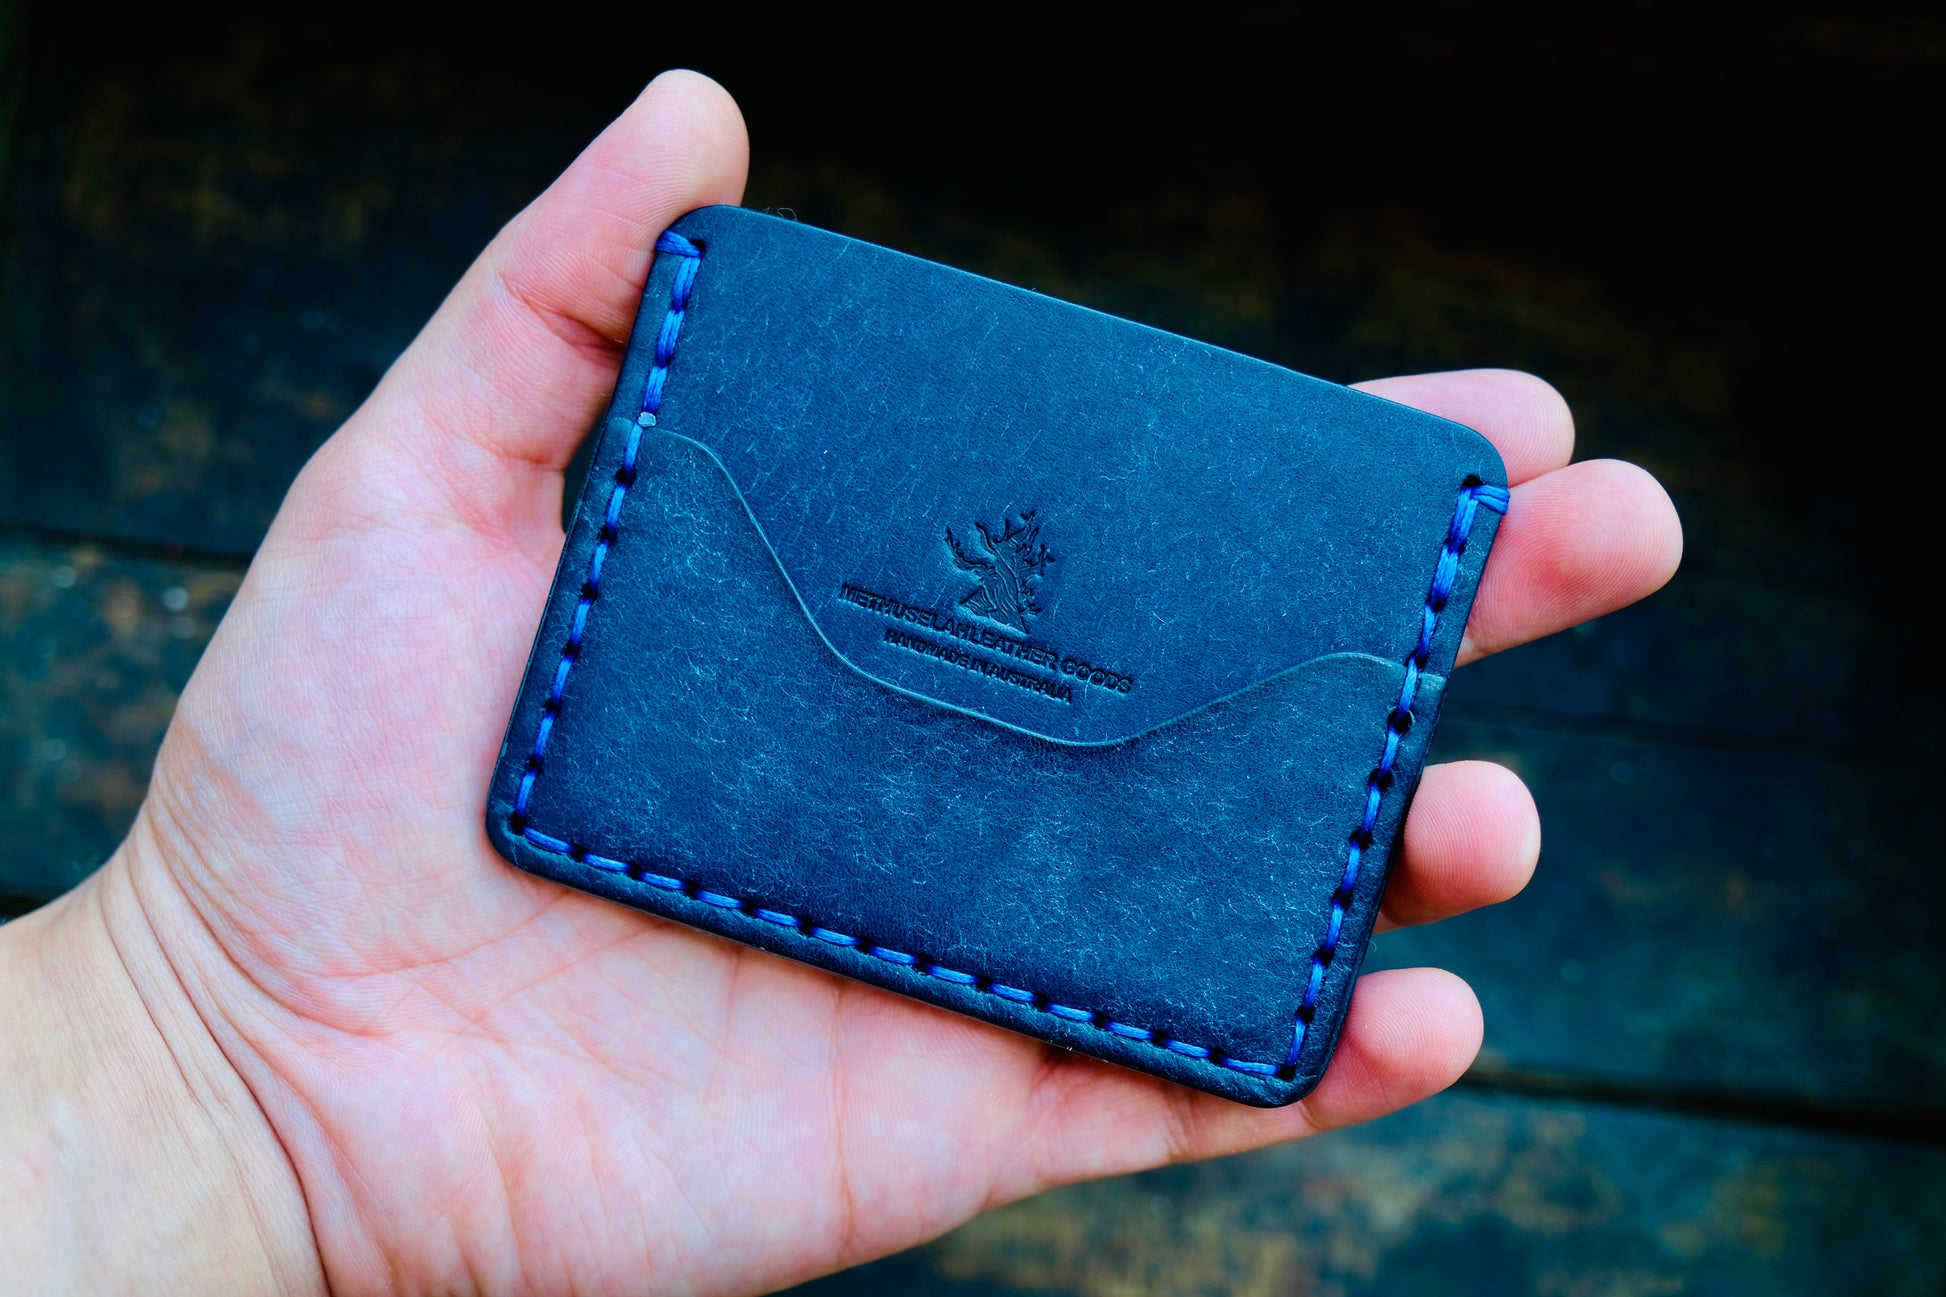 Handmade leather wallet